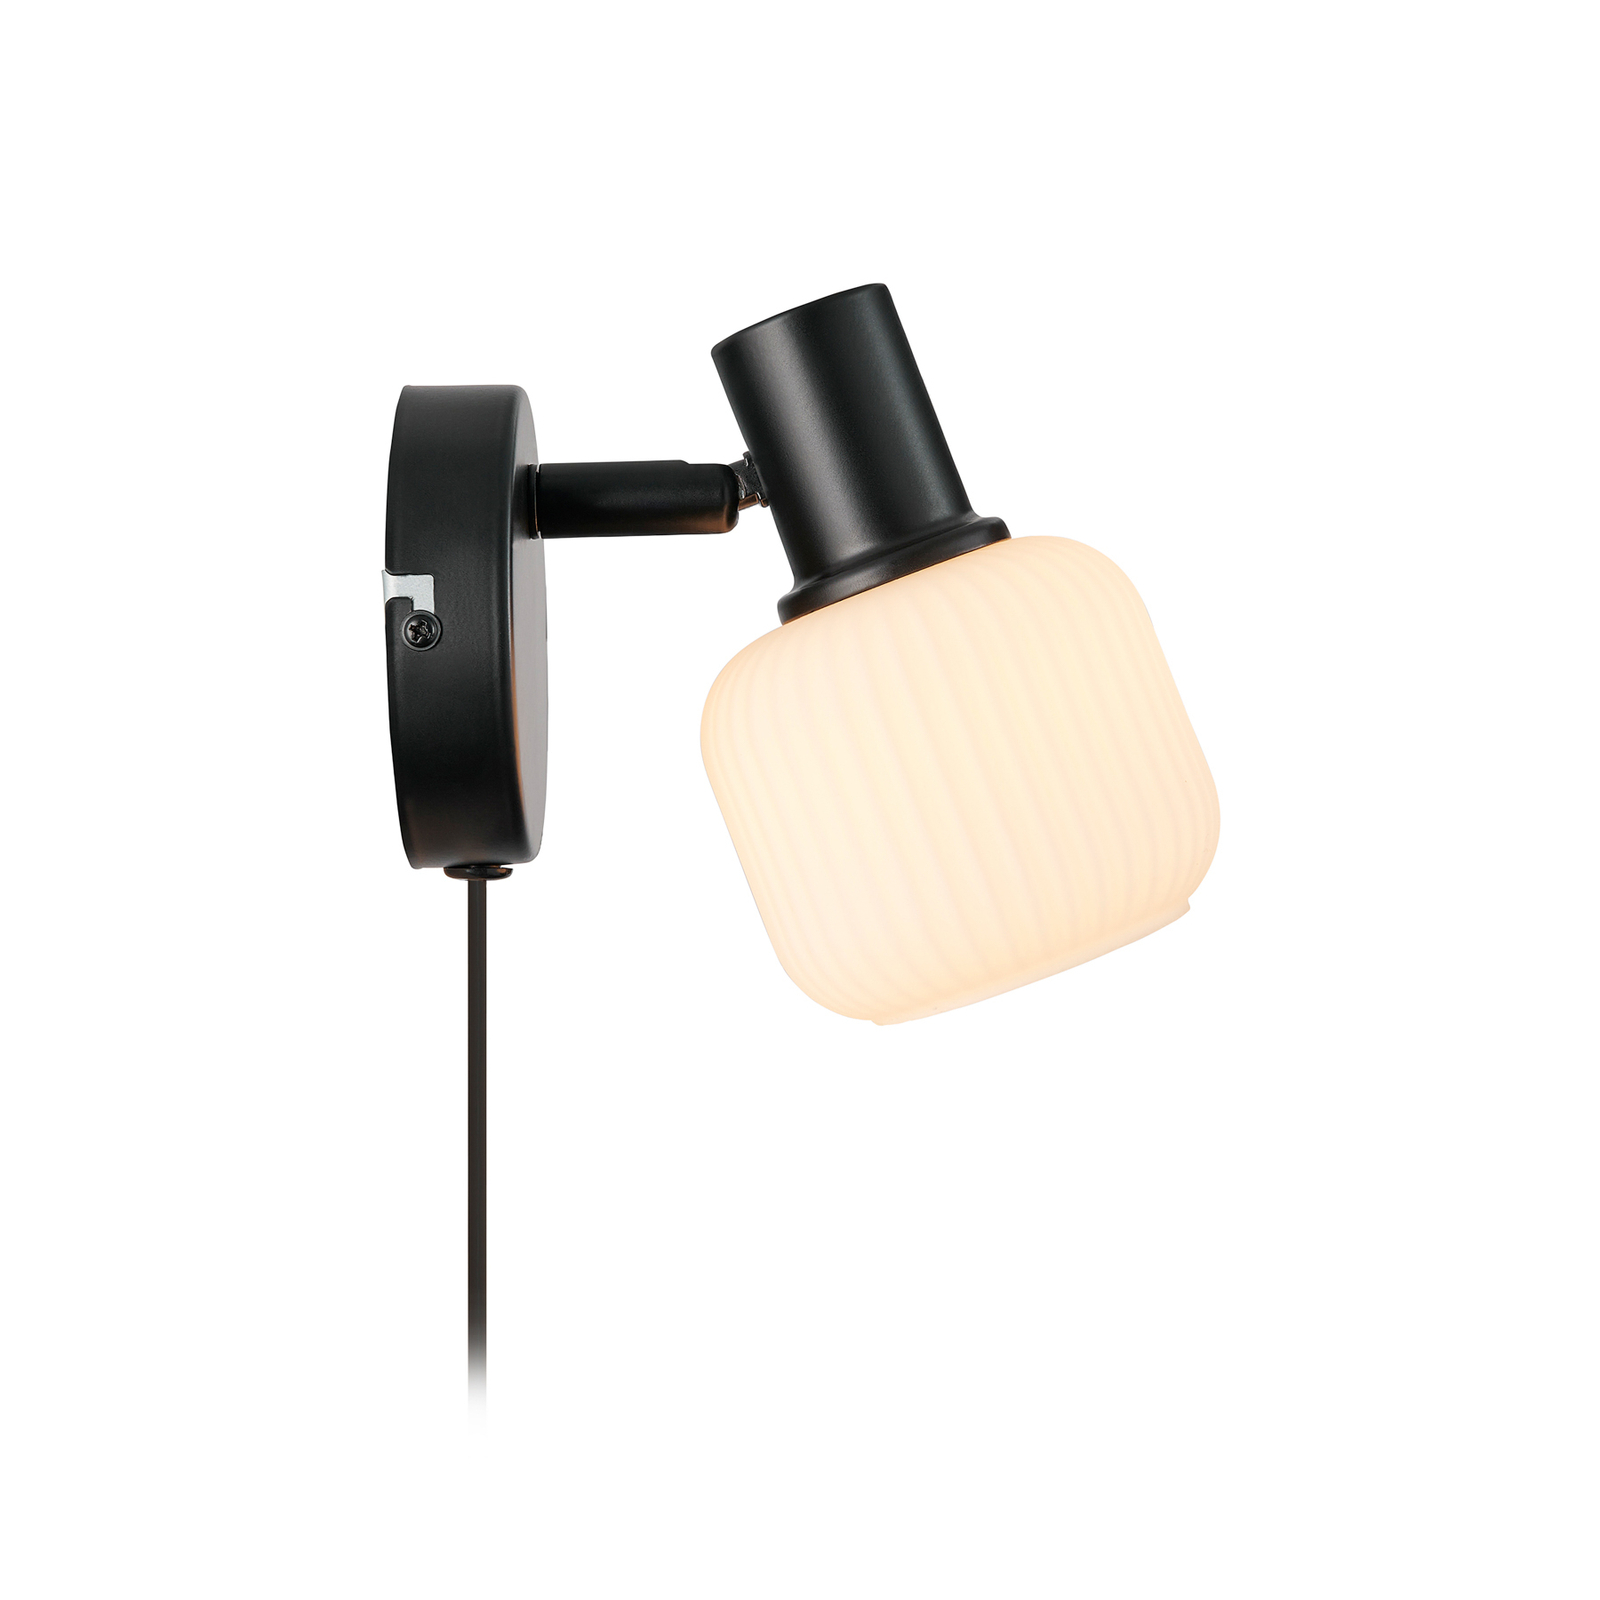 Milford Mini wall light, black, ribbed glass, with plug